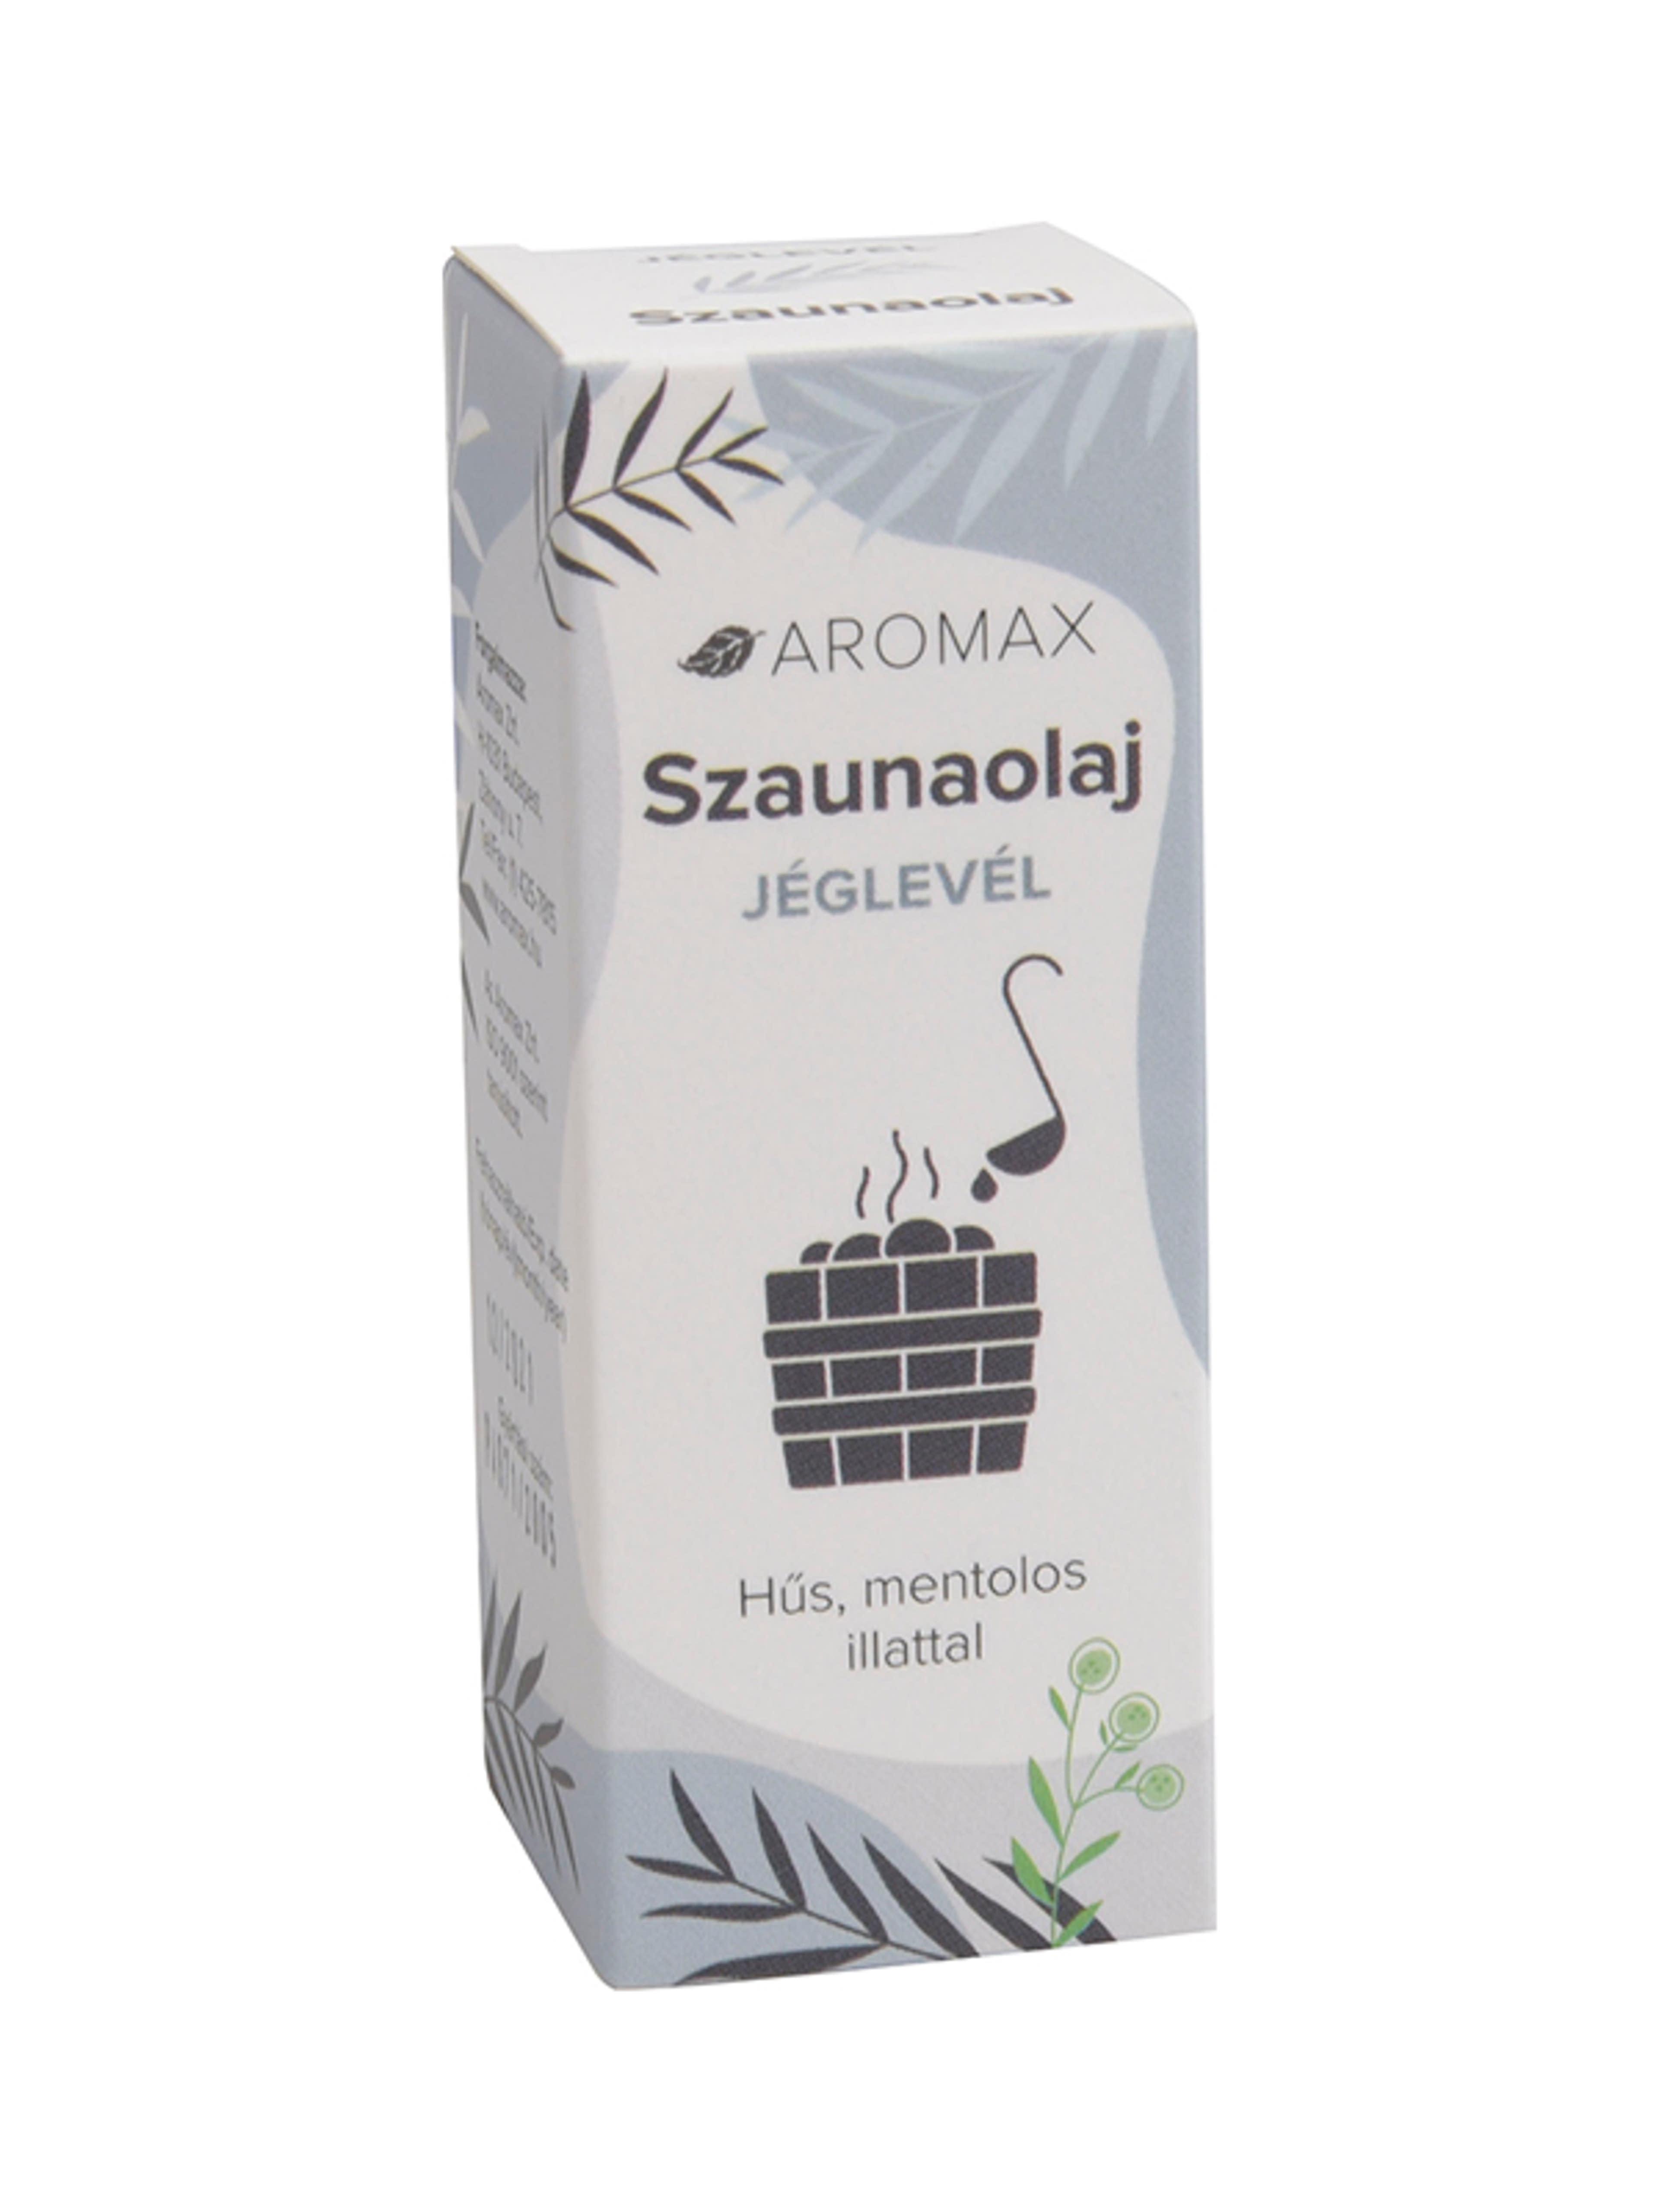 Aromax szaunaolaj jéglevél - 20 ml